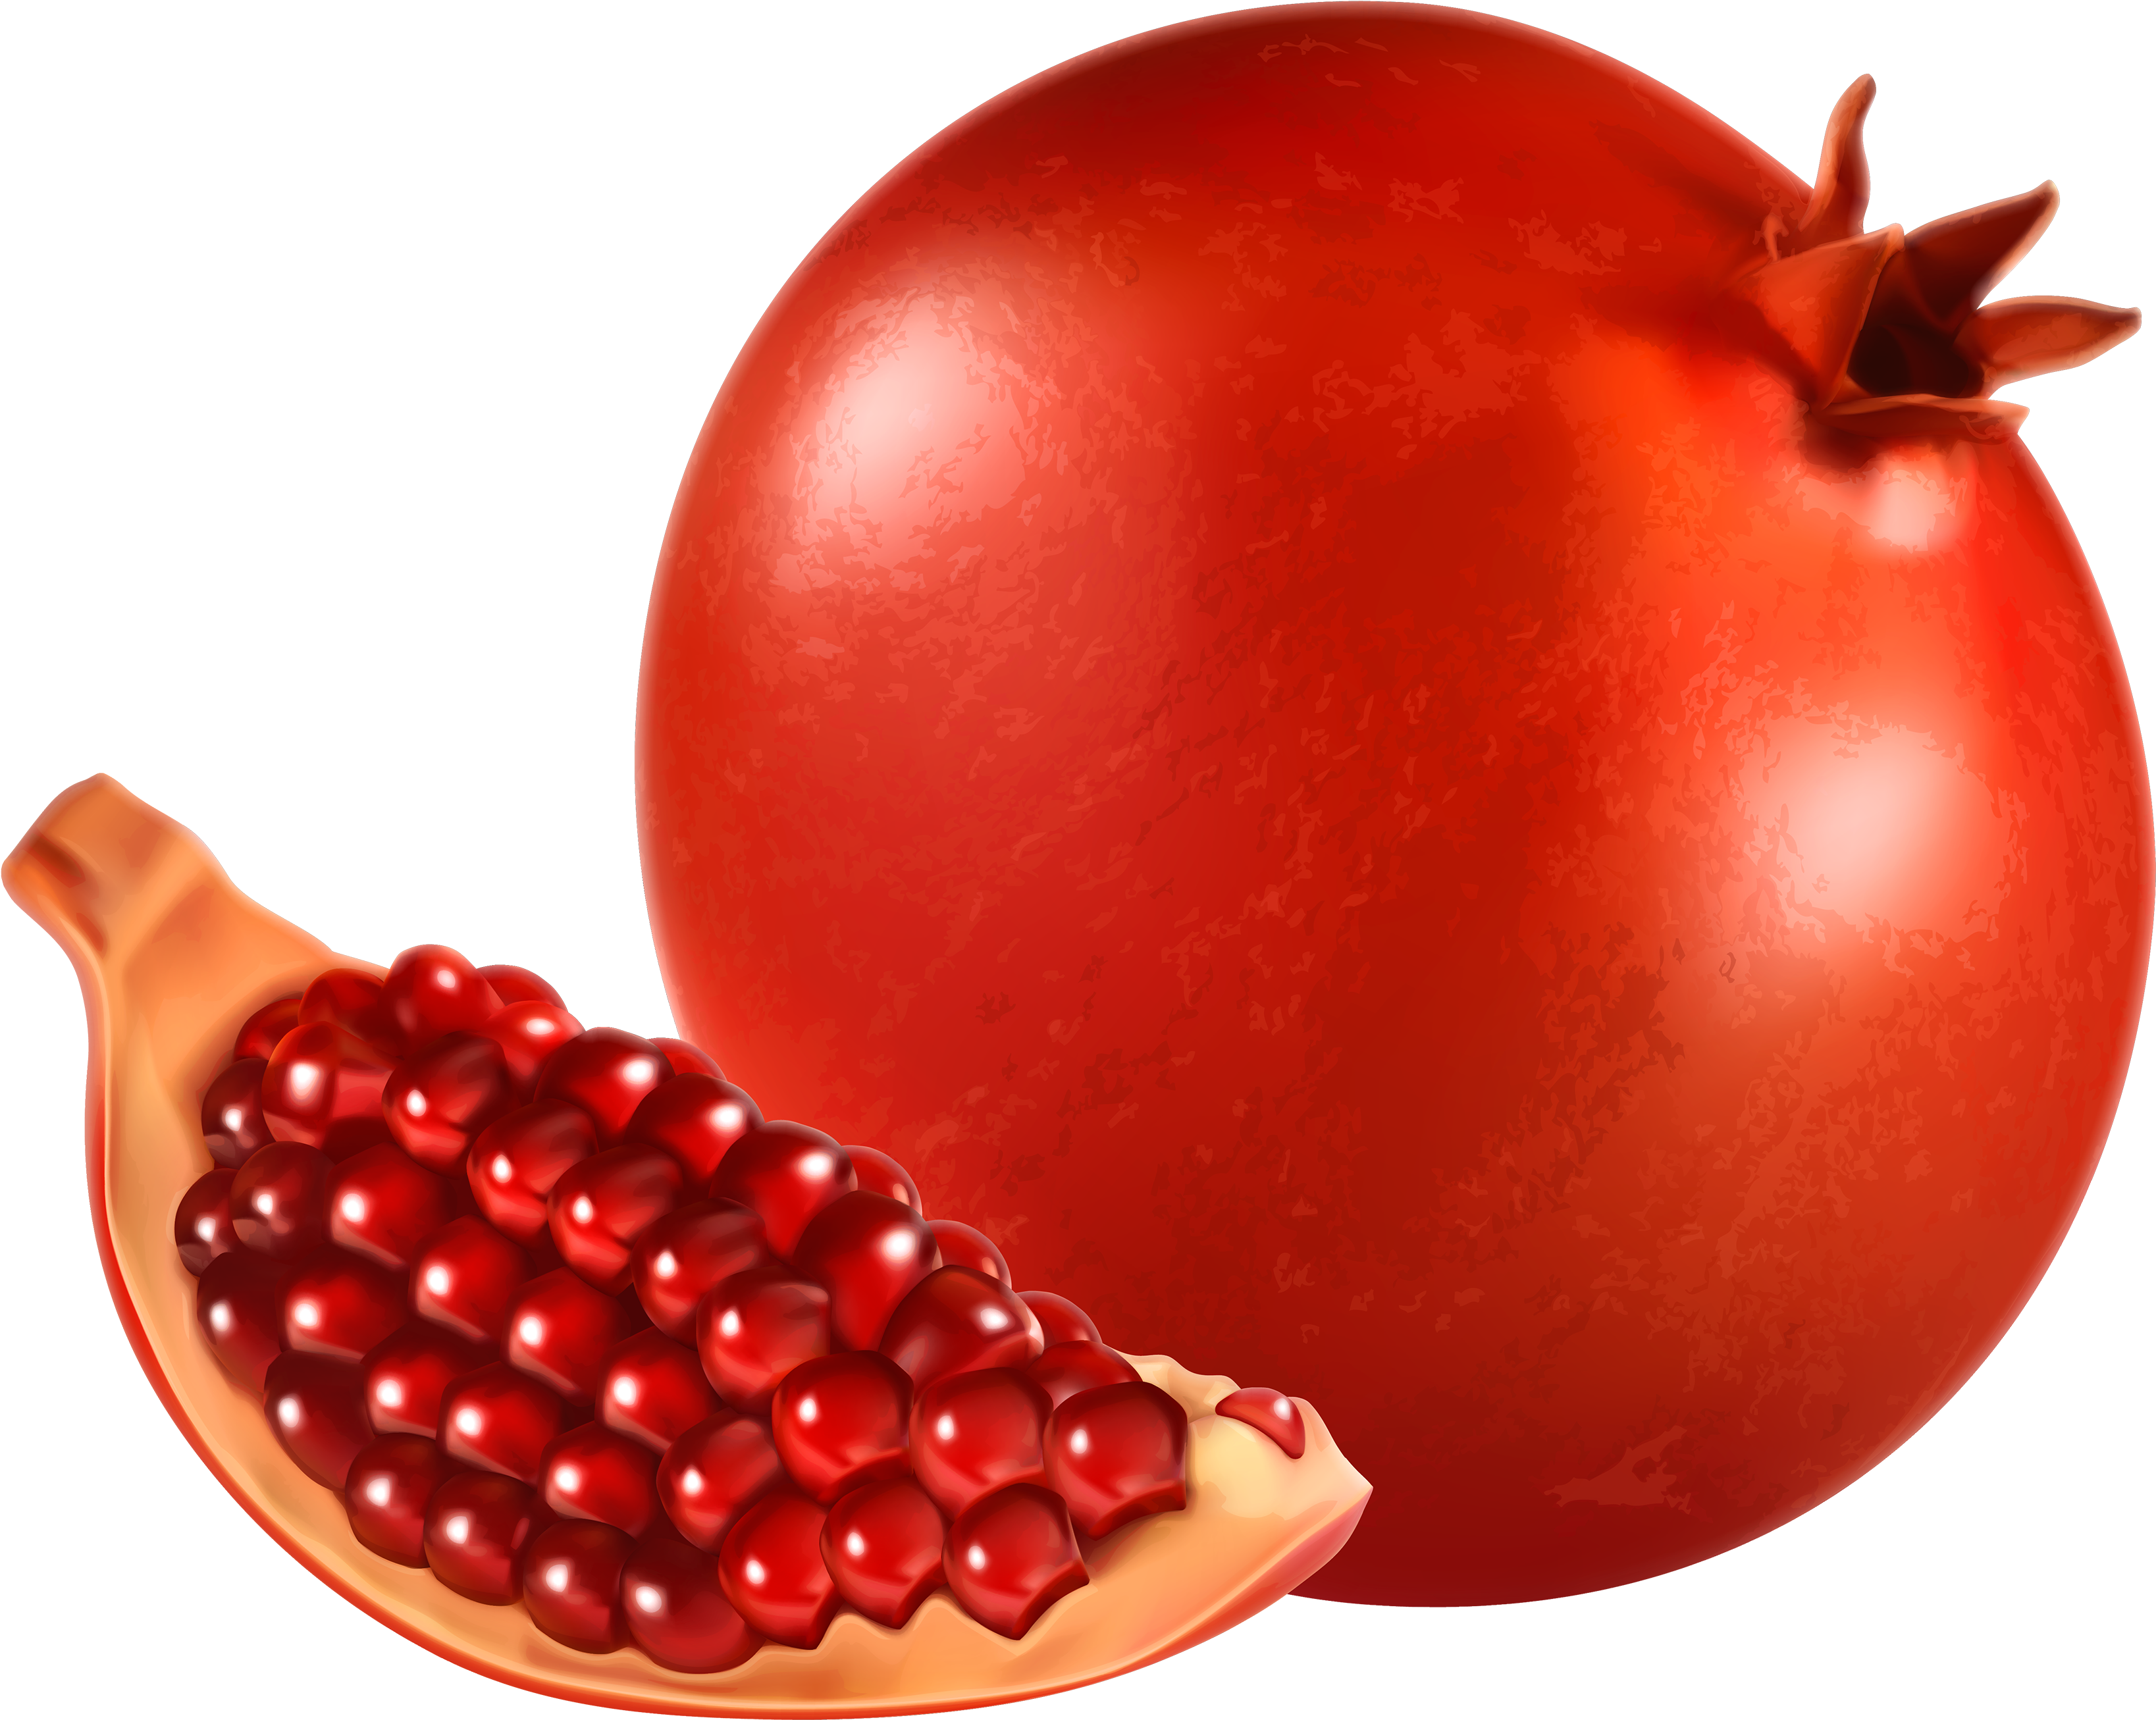 A Pomegranate And A Slice Of Pomegranate